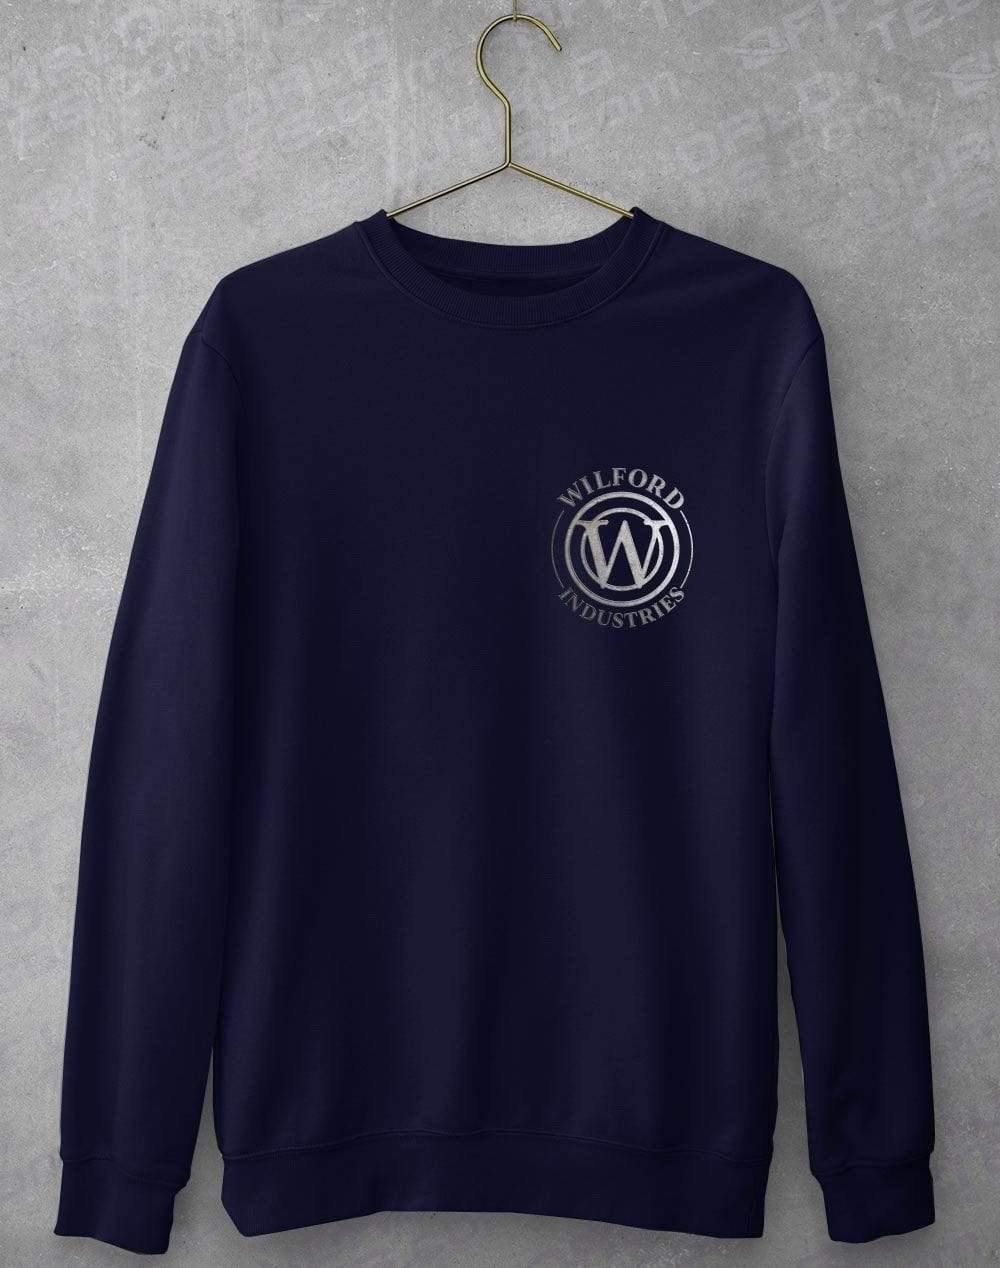 Wilford Industries Pocket Print Sweatshirt S / Oxford Navy  - Off World Tees